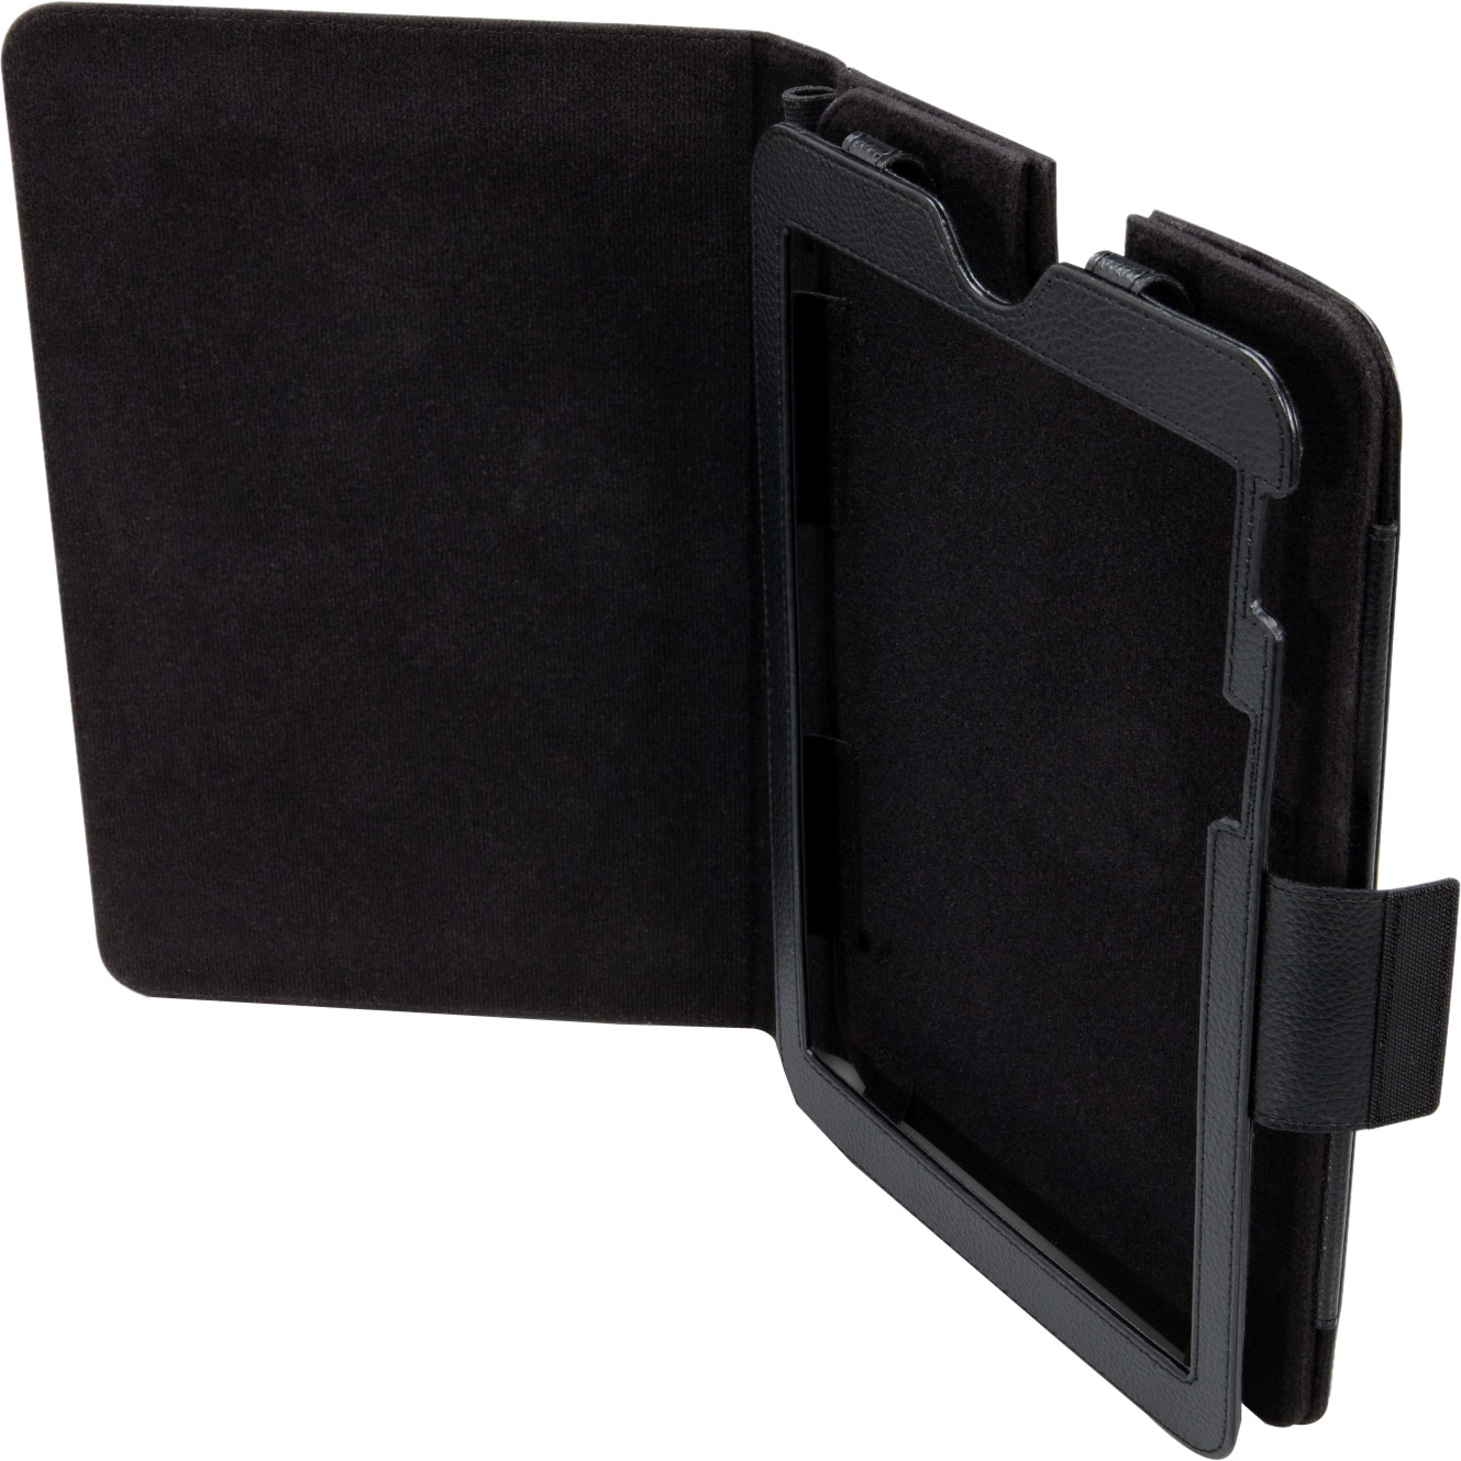 Toshiba PA3945U-1EAB Carrying Case (Portfolio) for 10" Tablet PC, Black - image 1 of 5